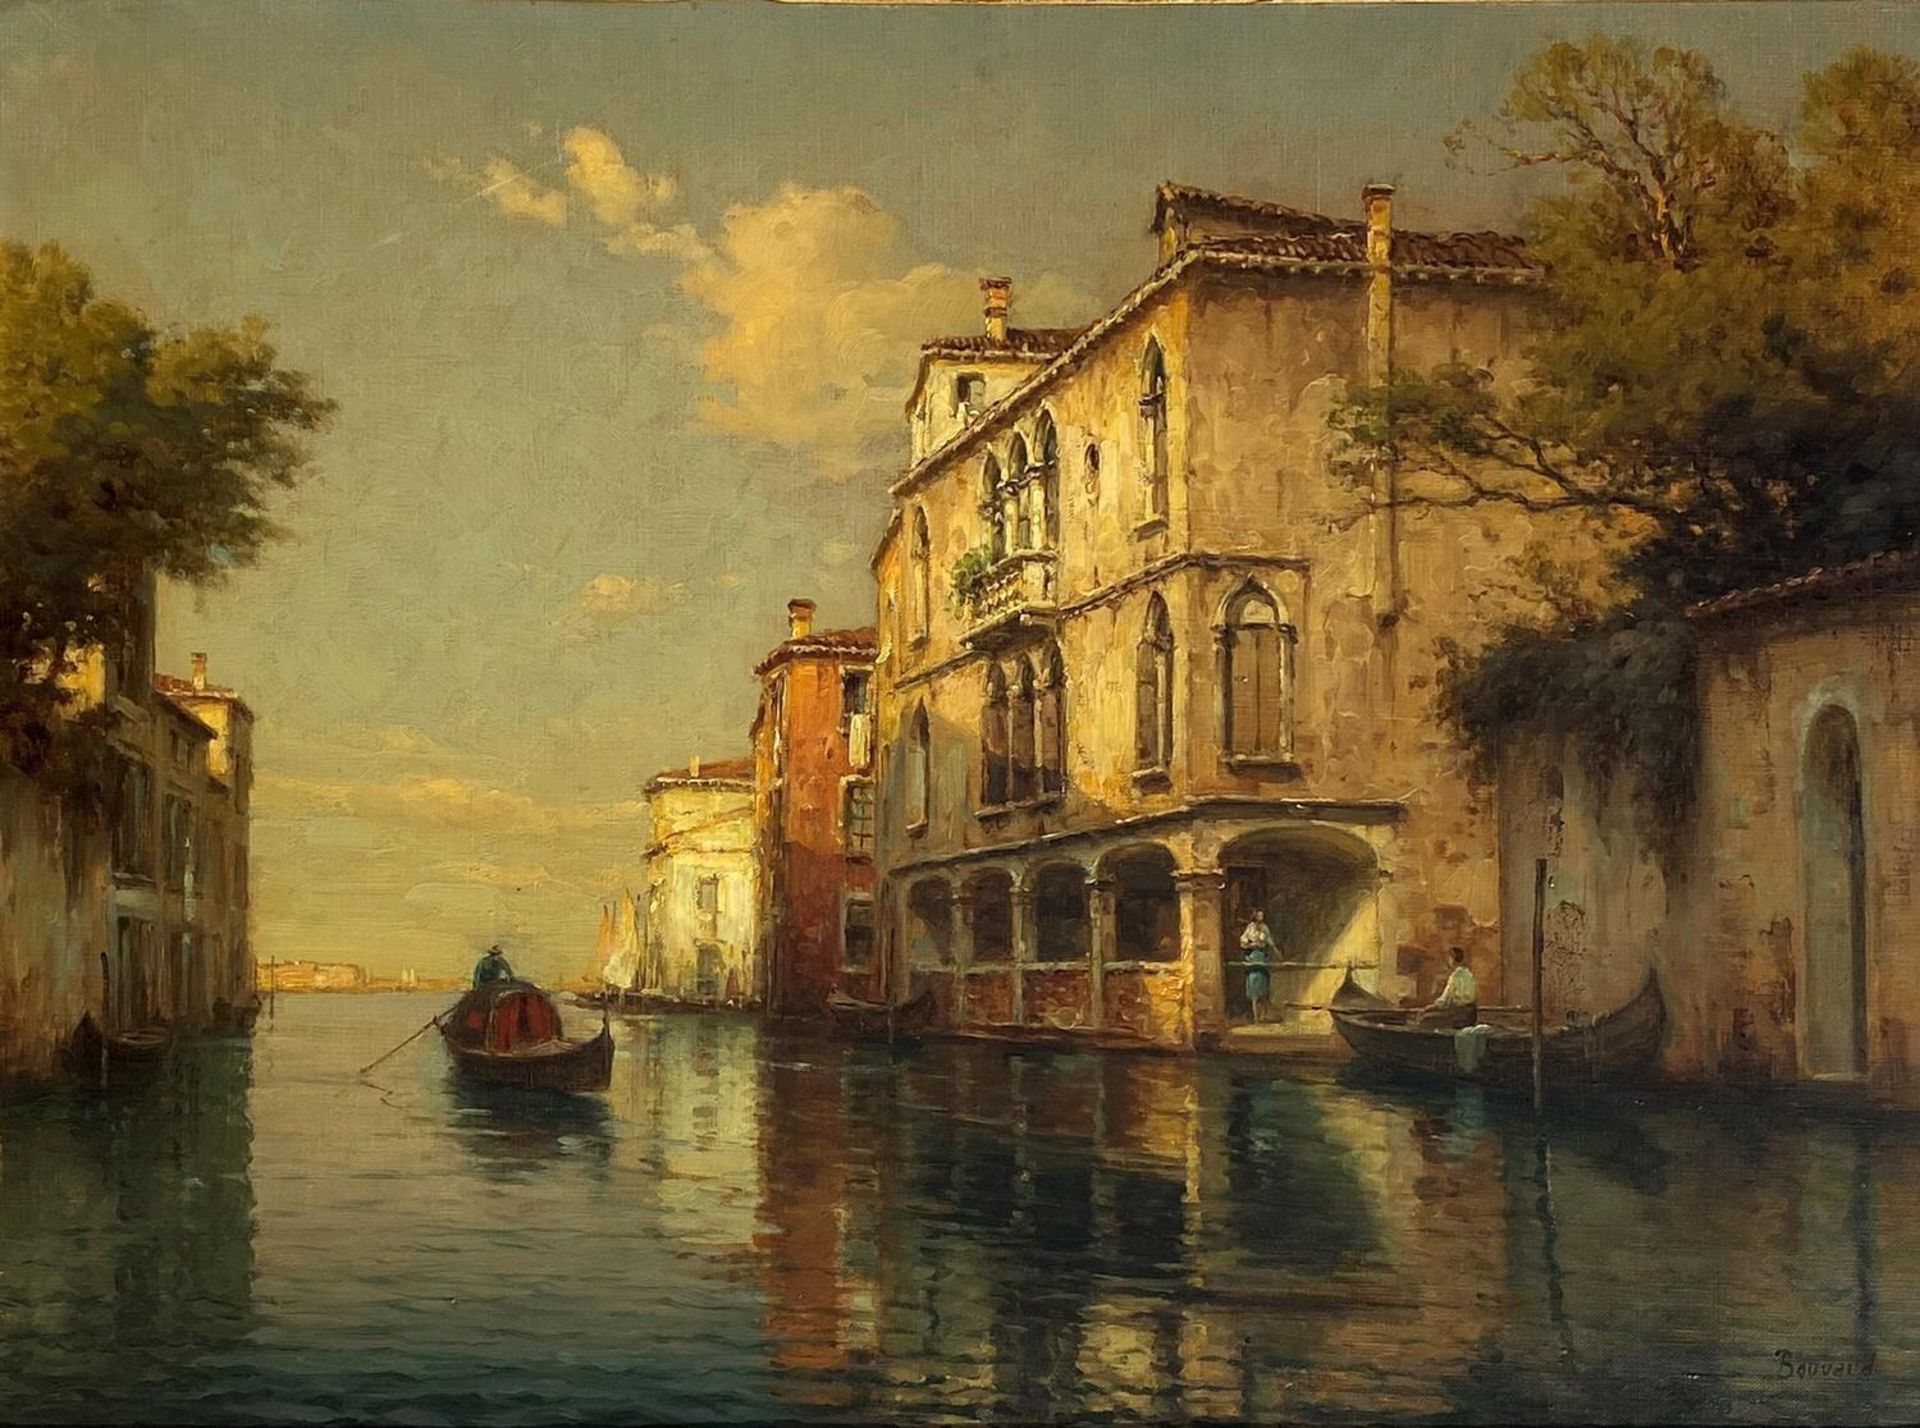 ** WITHDRAWN ** Antoine Bouvard - Gondola on Venetian backwater, French oil on canvas inscribed Kin